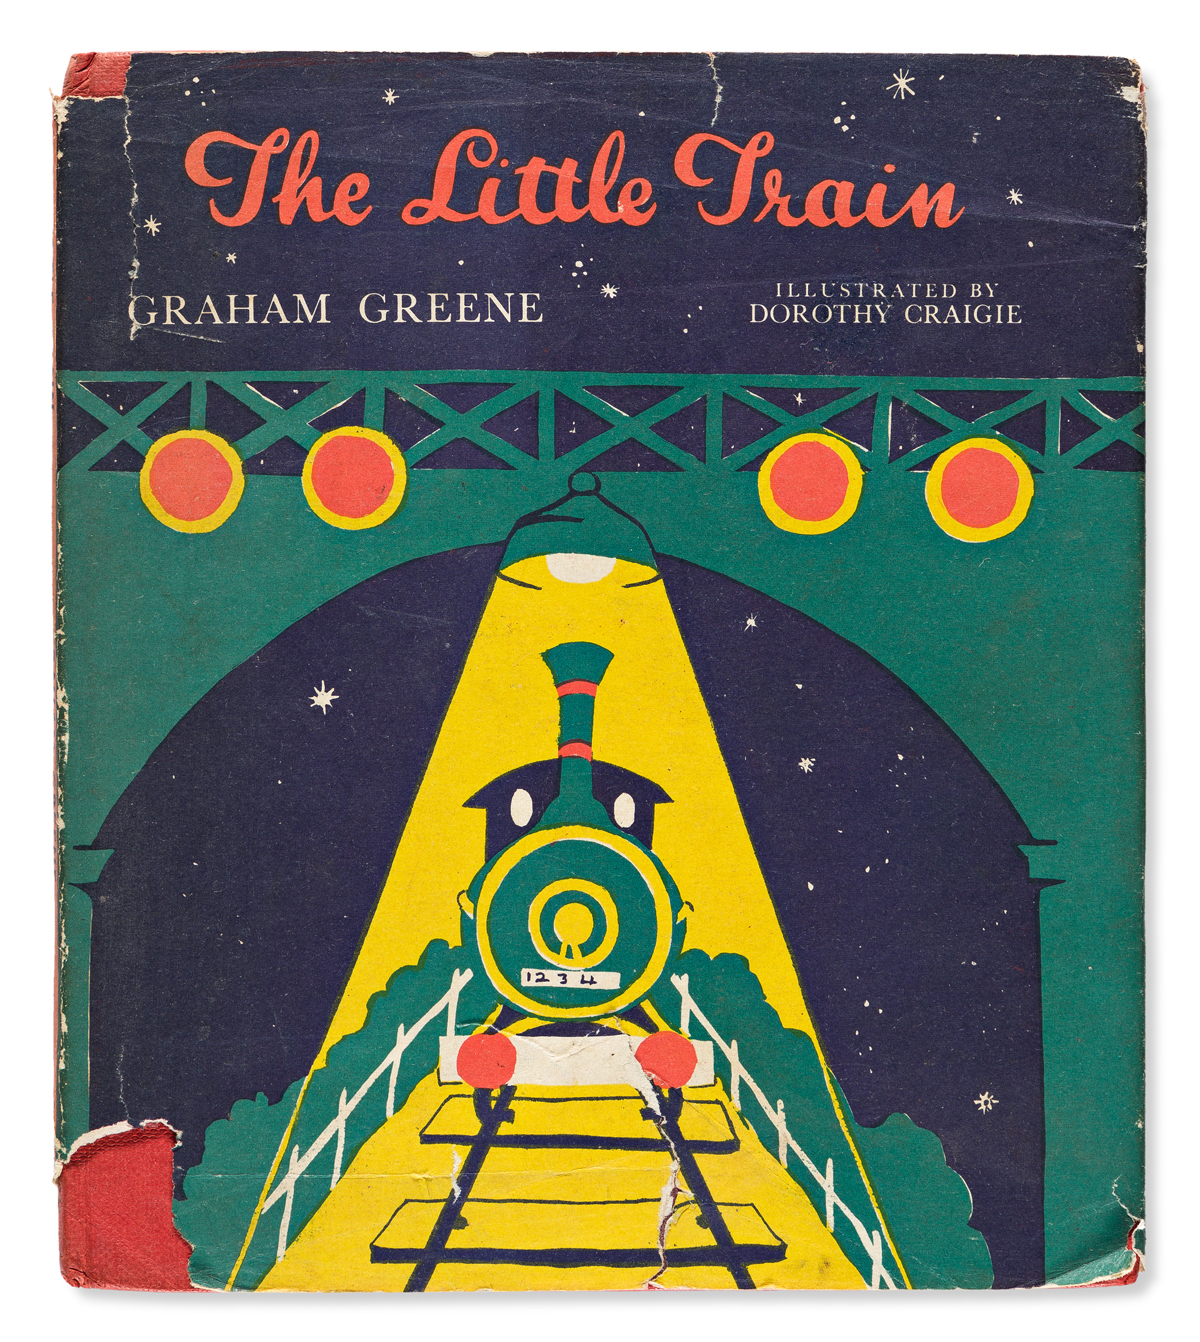 (CHILDRENS LITERATURE.) Greene, Graham. The Little Horse Bus * The Little Train.